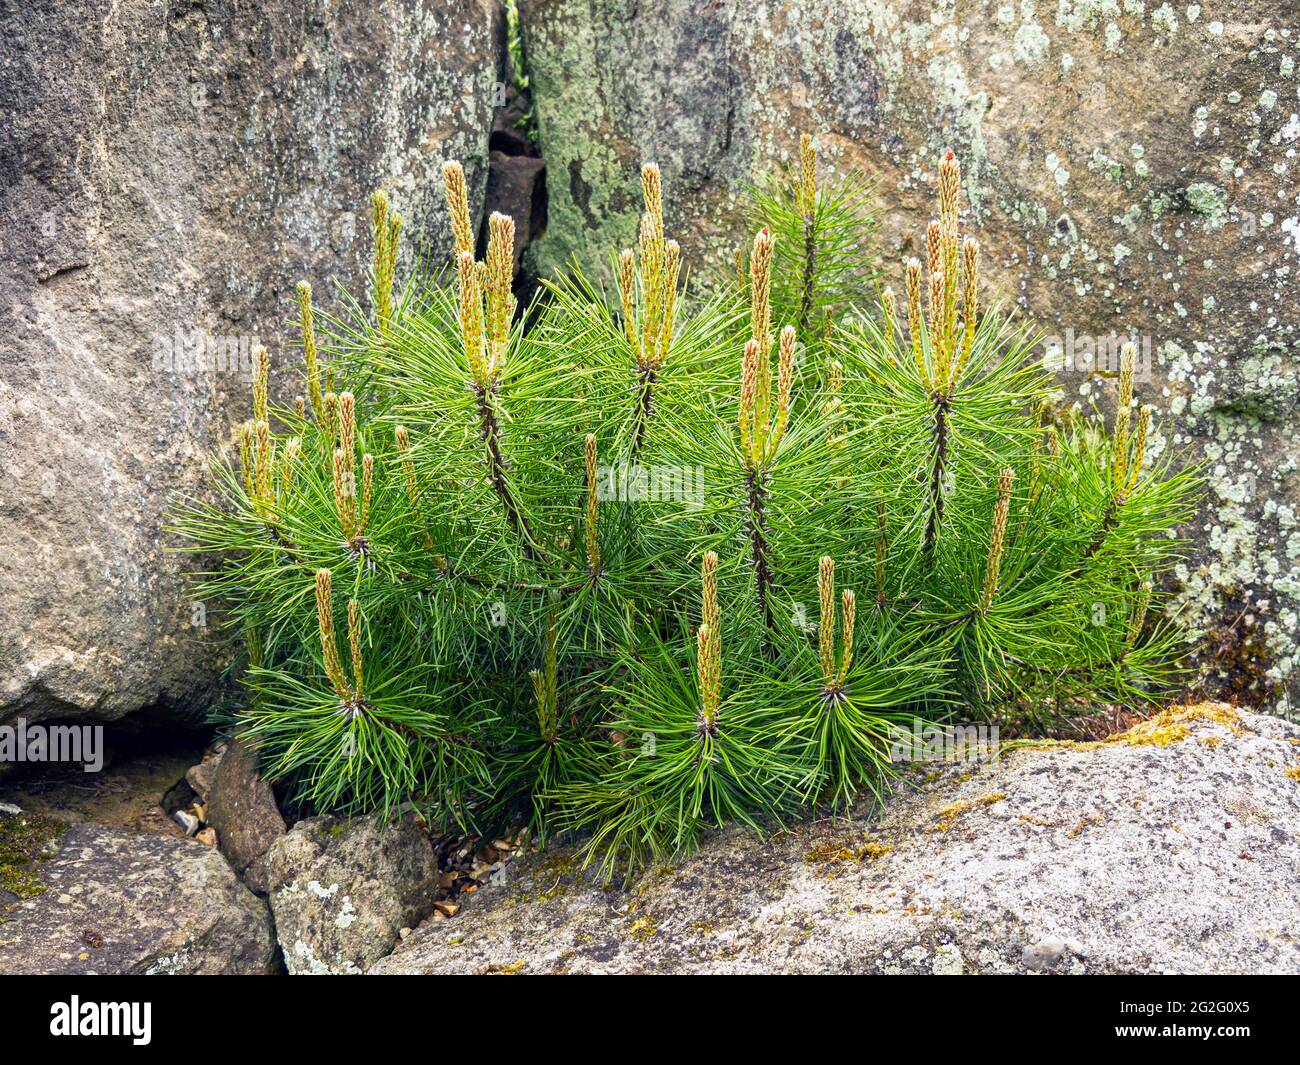 Dwarf pine tree in a rock garden Stock Photo